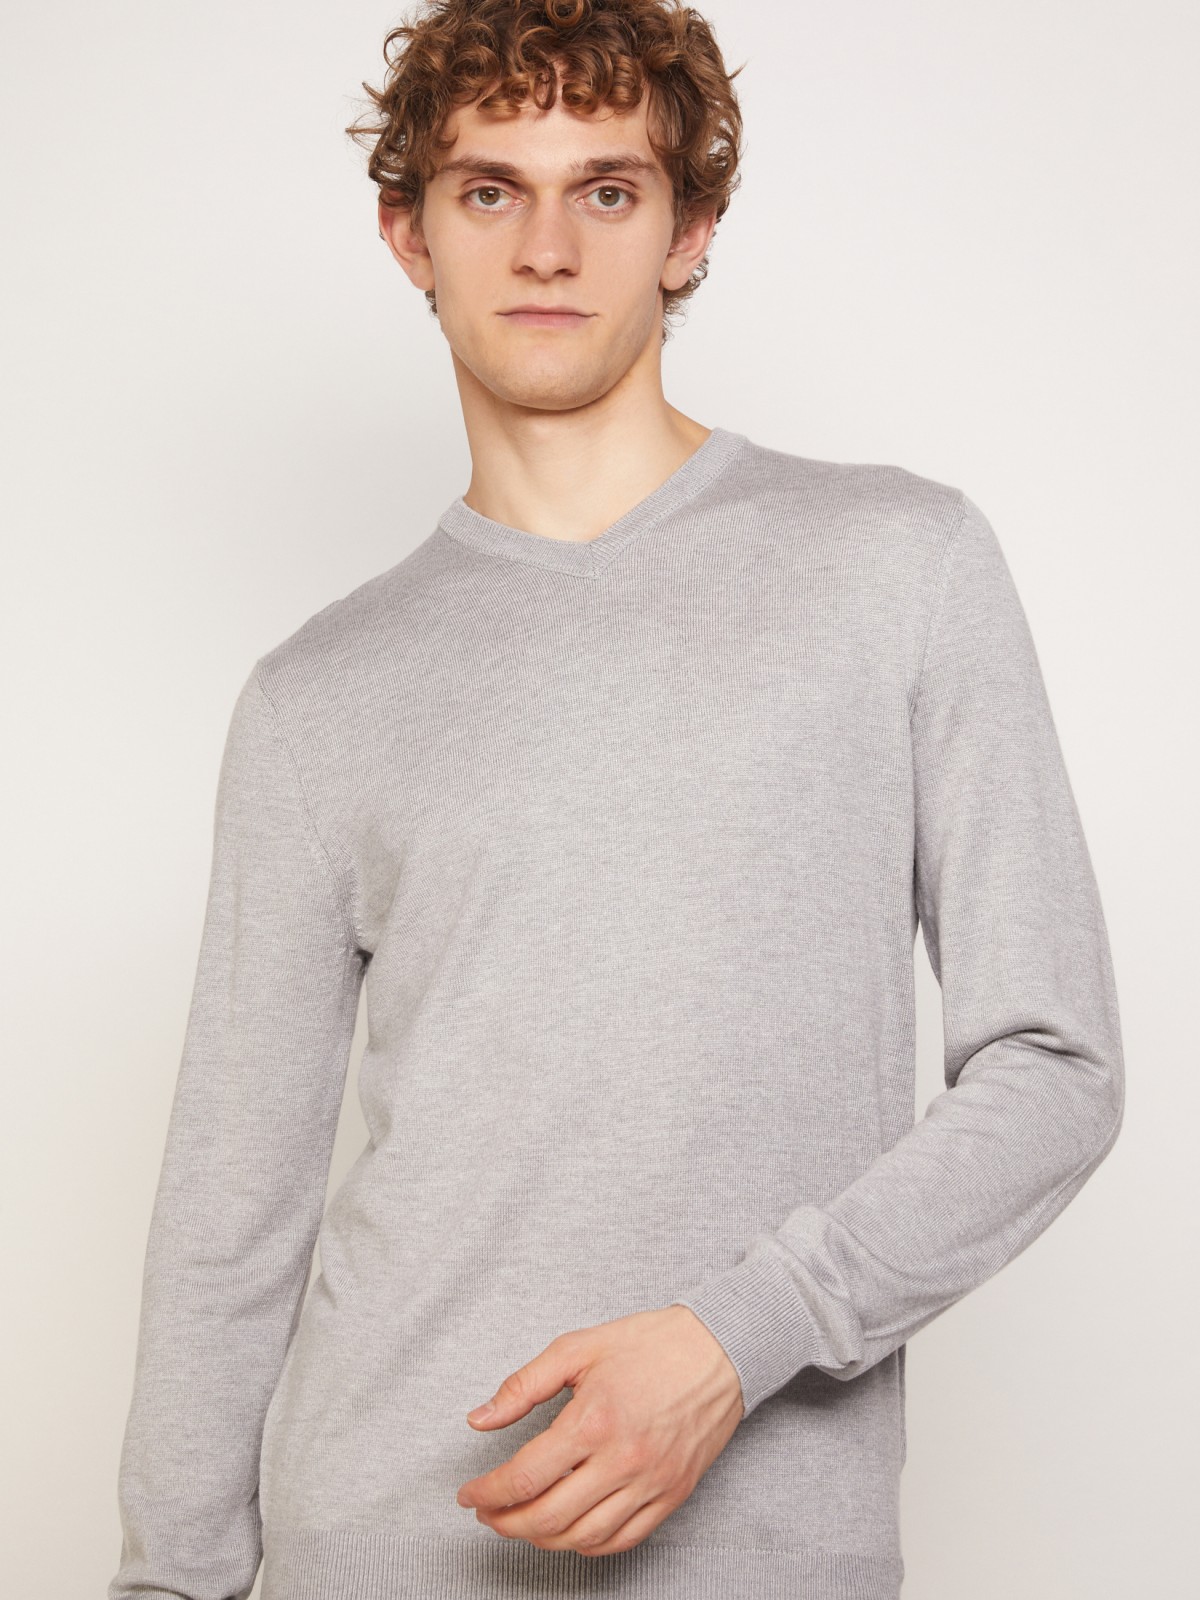 Пуловер zolla 011346163022, цвет серый, размер S - фото 3